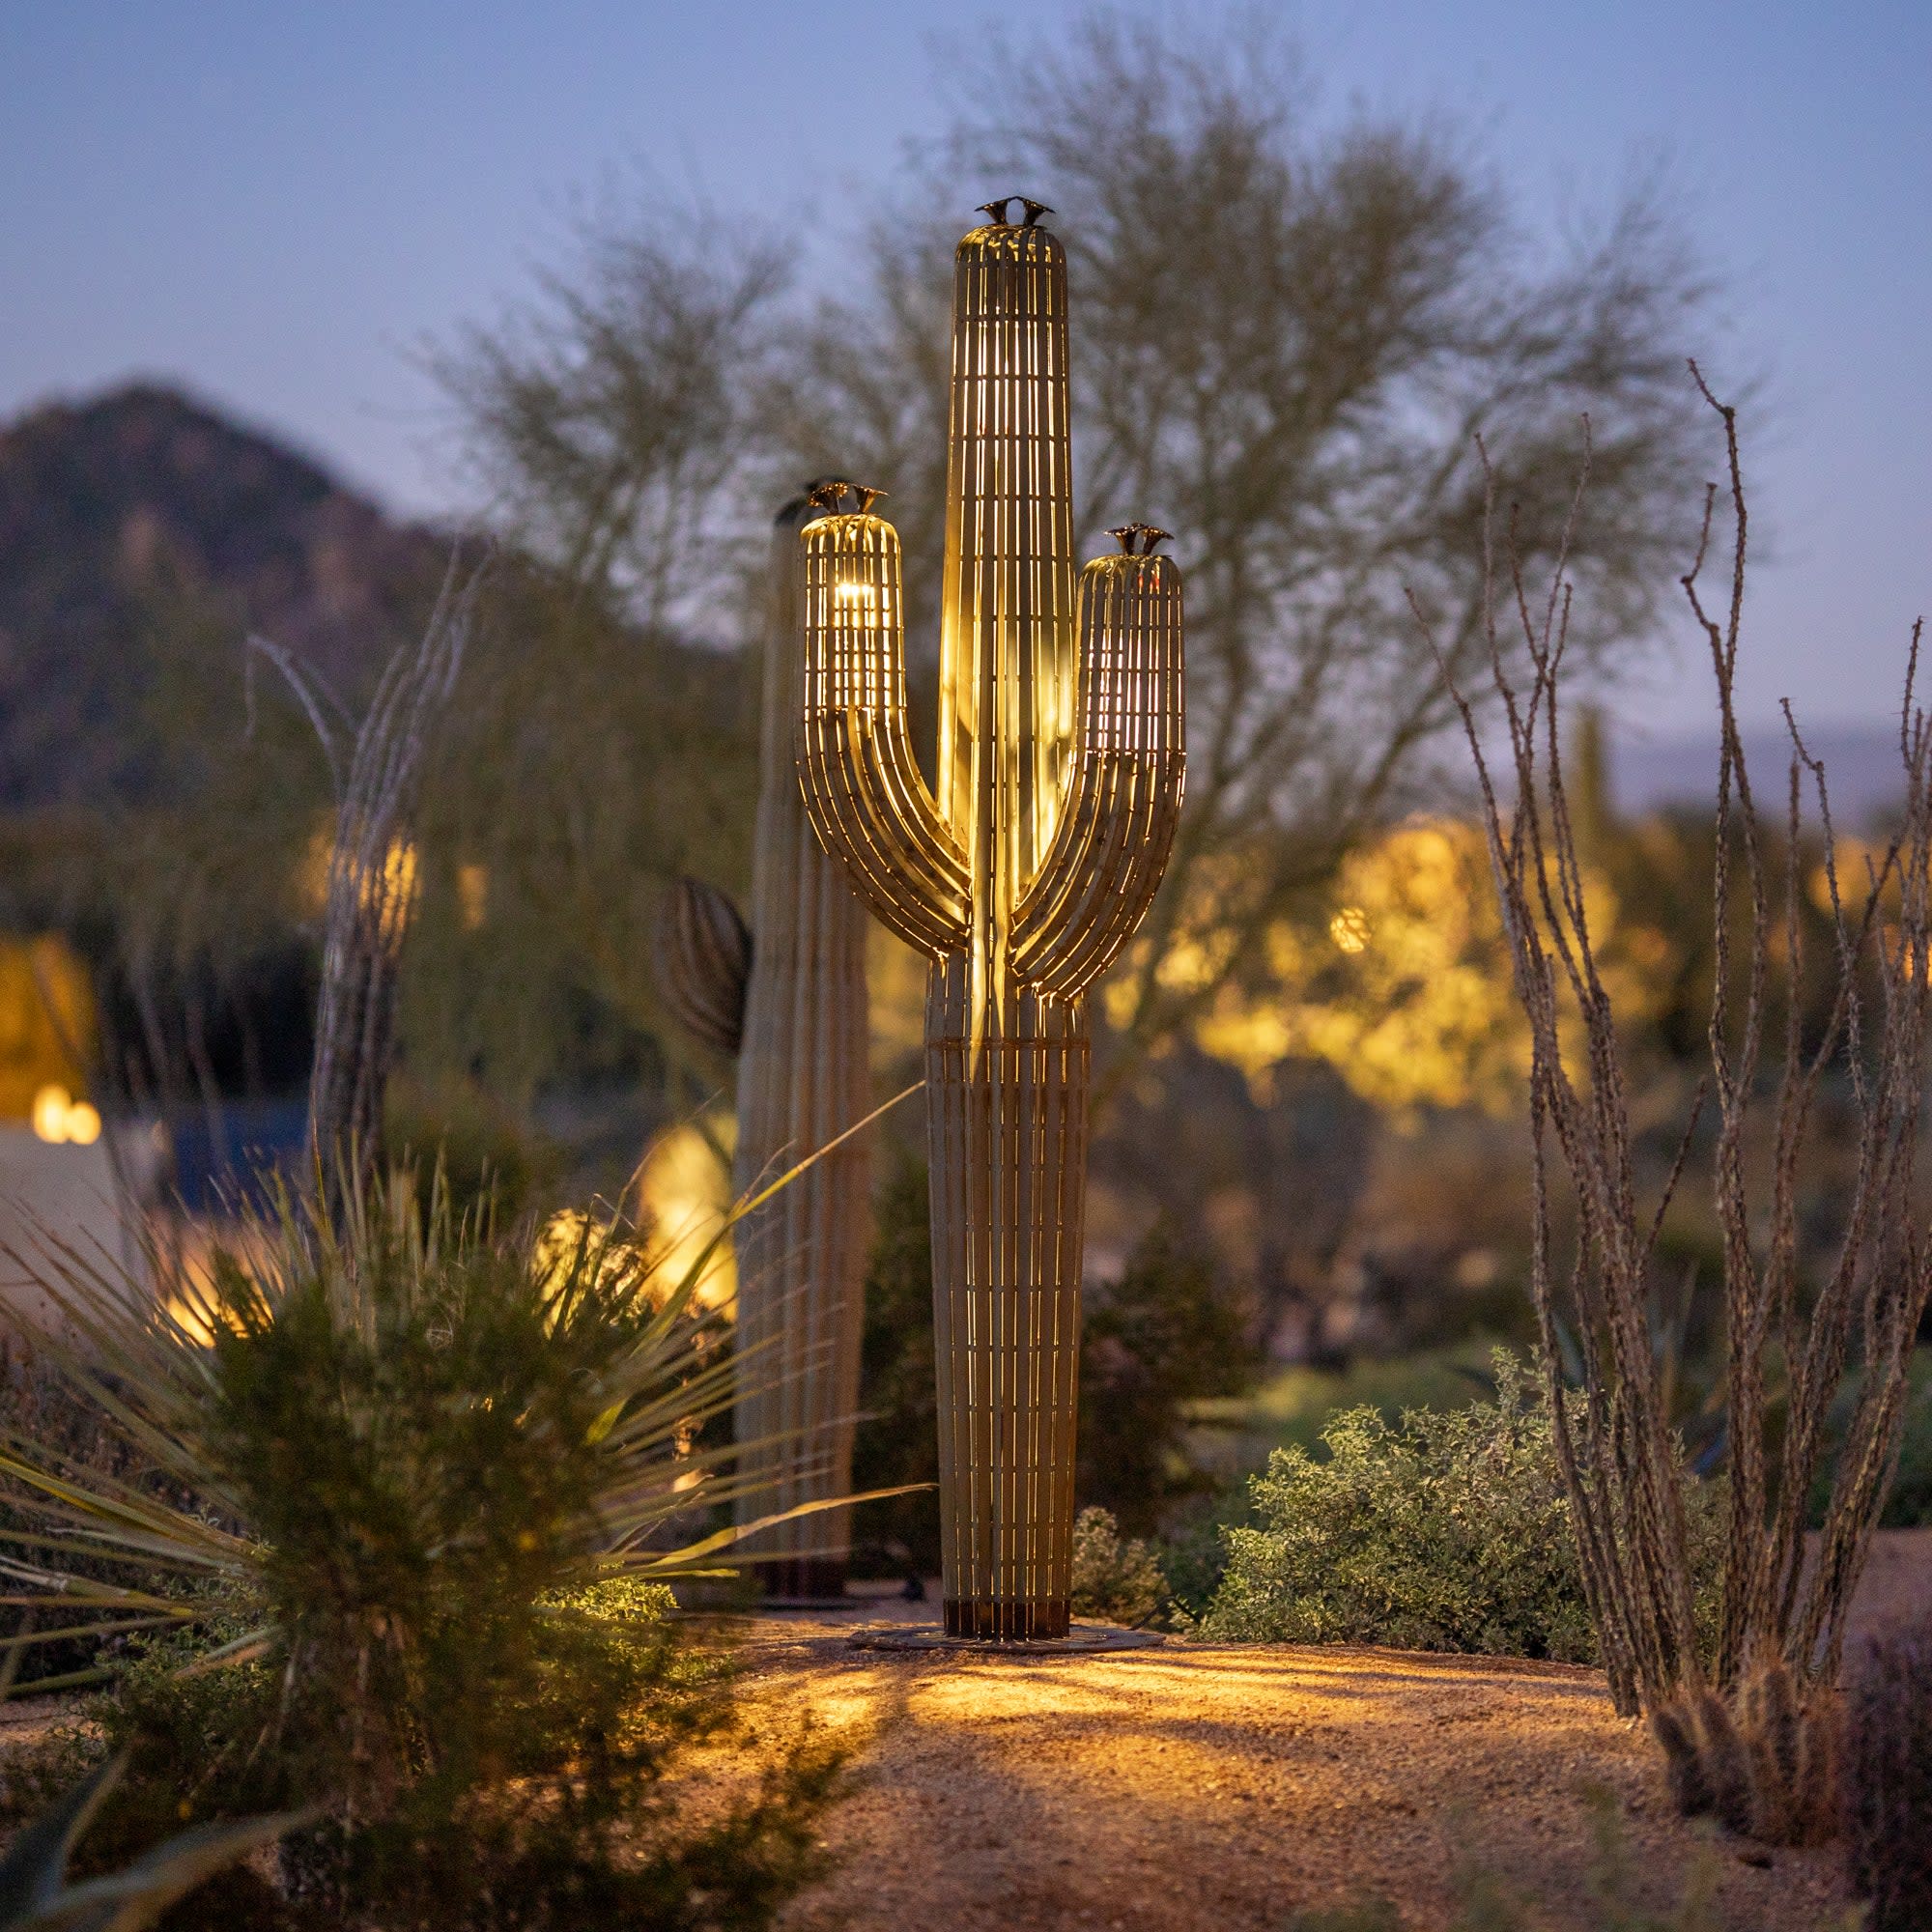 7ft—7 ft Saguaro Cactus internally lit with LED Spotlights at dusk in desert landscape among native plants.